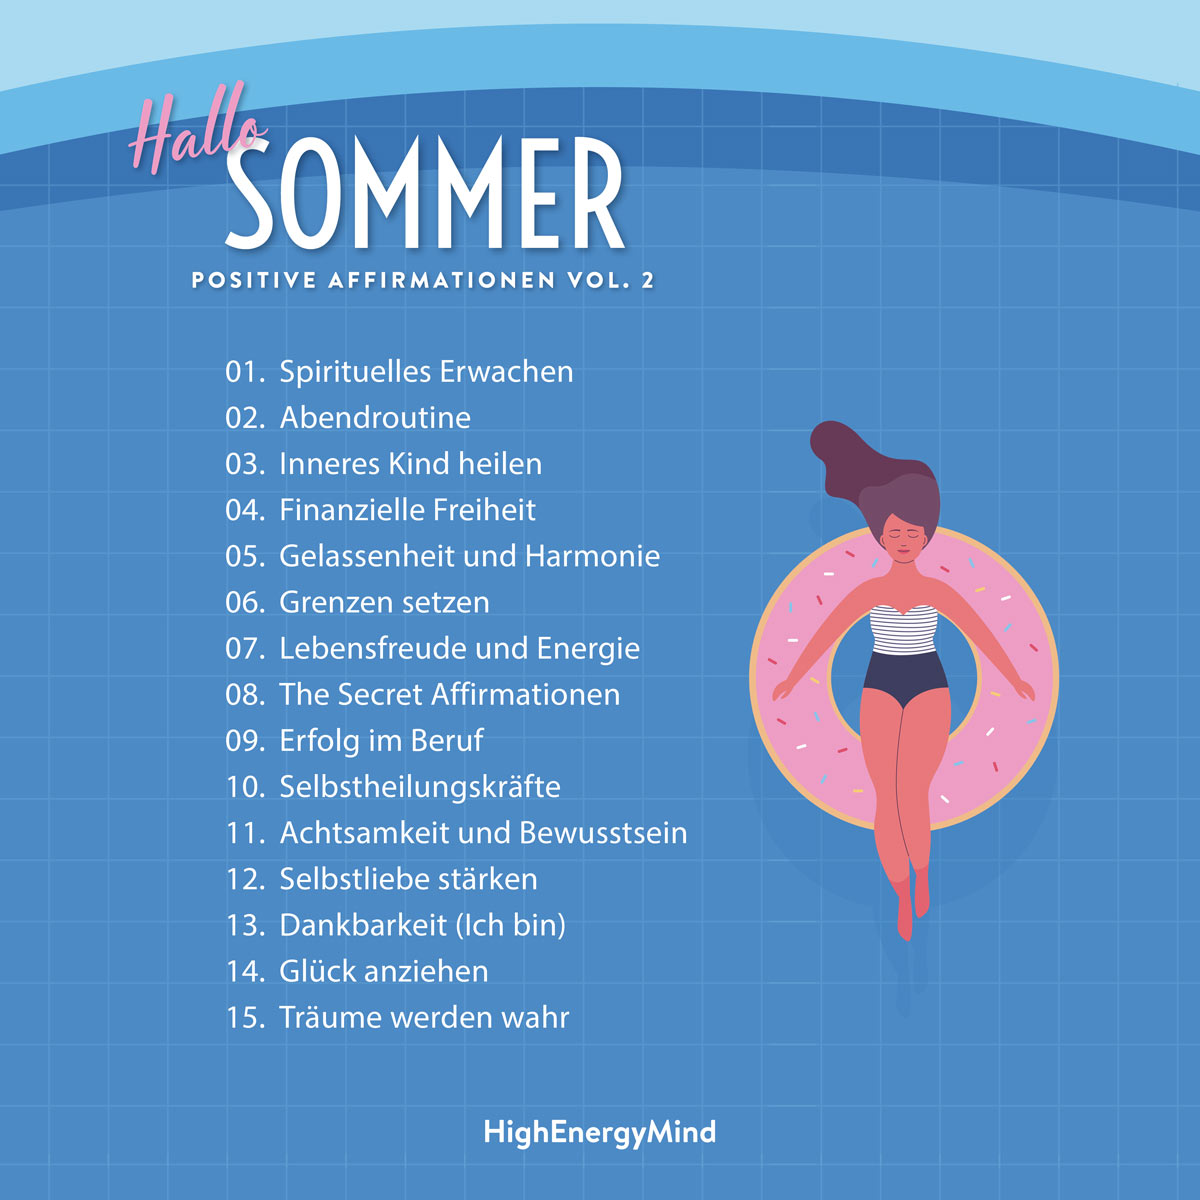 Hallo Sommer - Positive Affirmationen Vol. 2 - Album